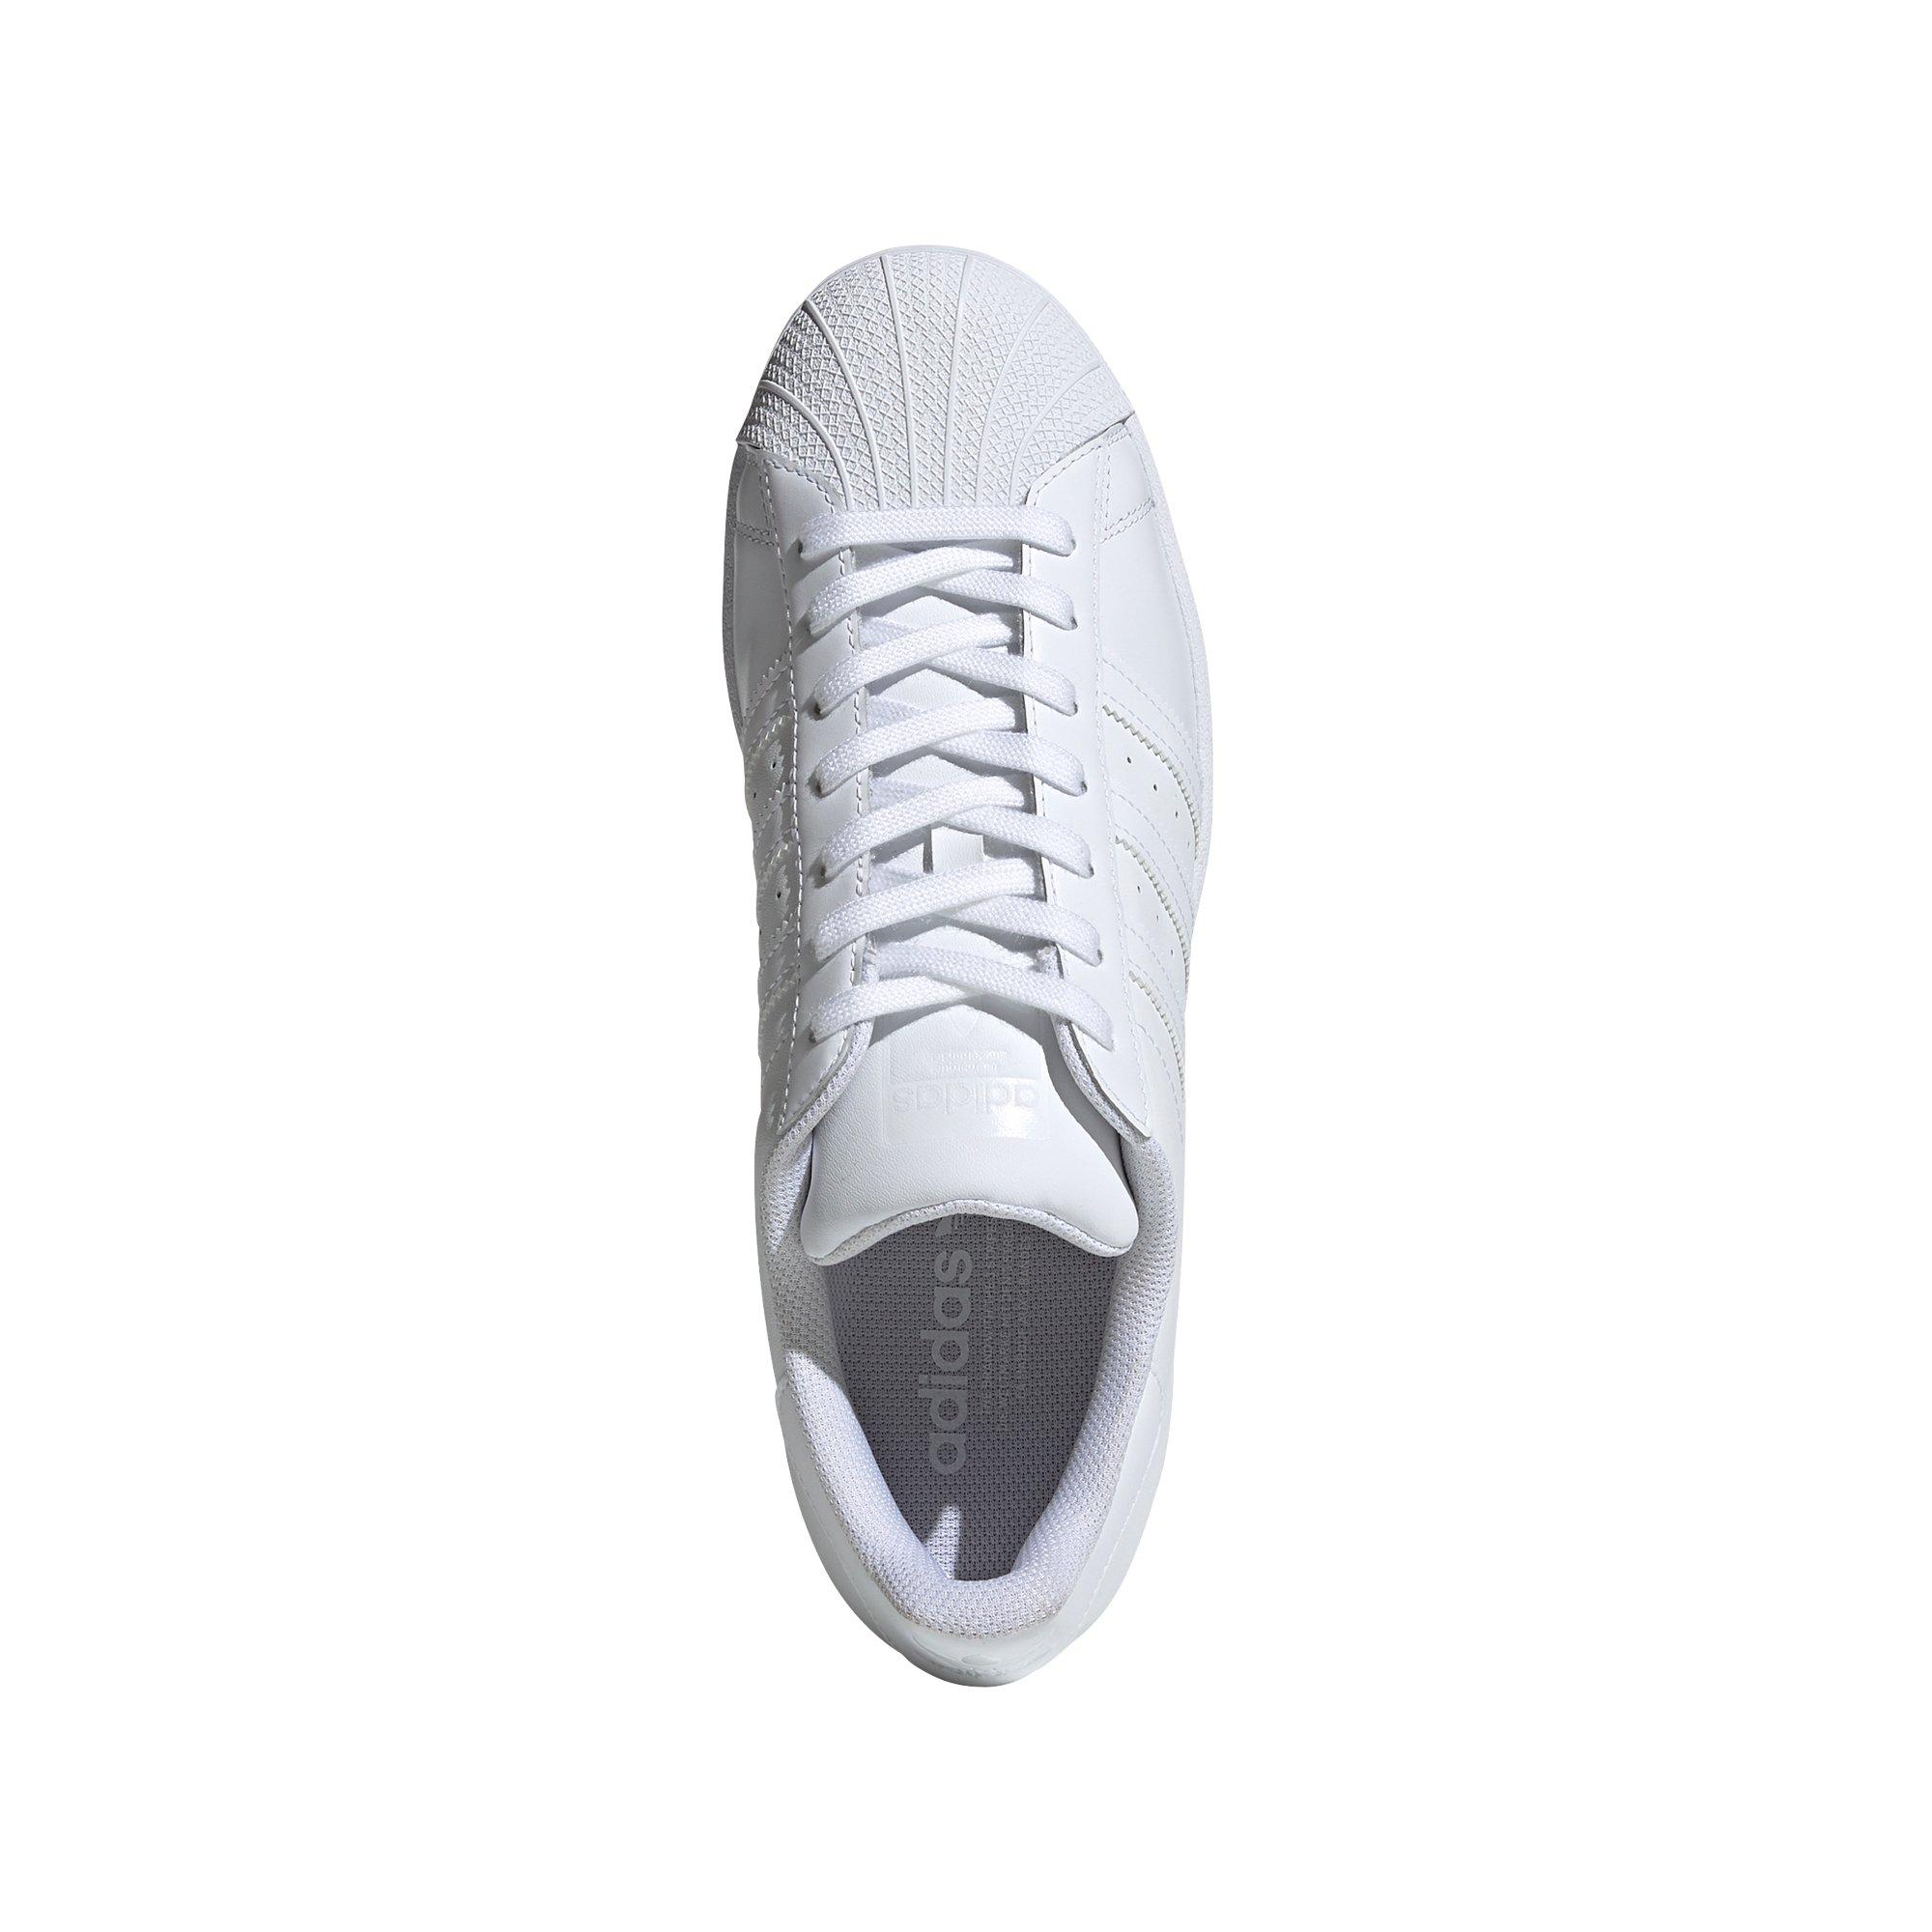 Voornaamwoord Top park adidas Superstar "White" Men's Shoe